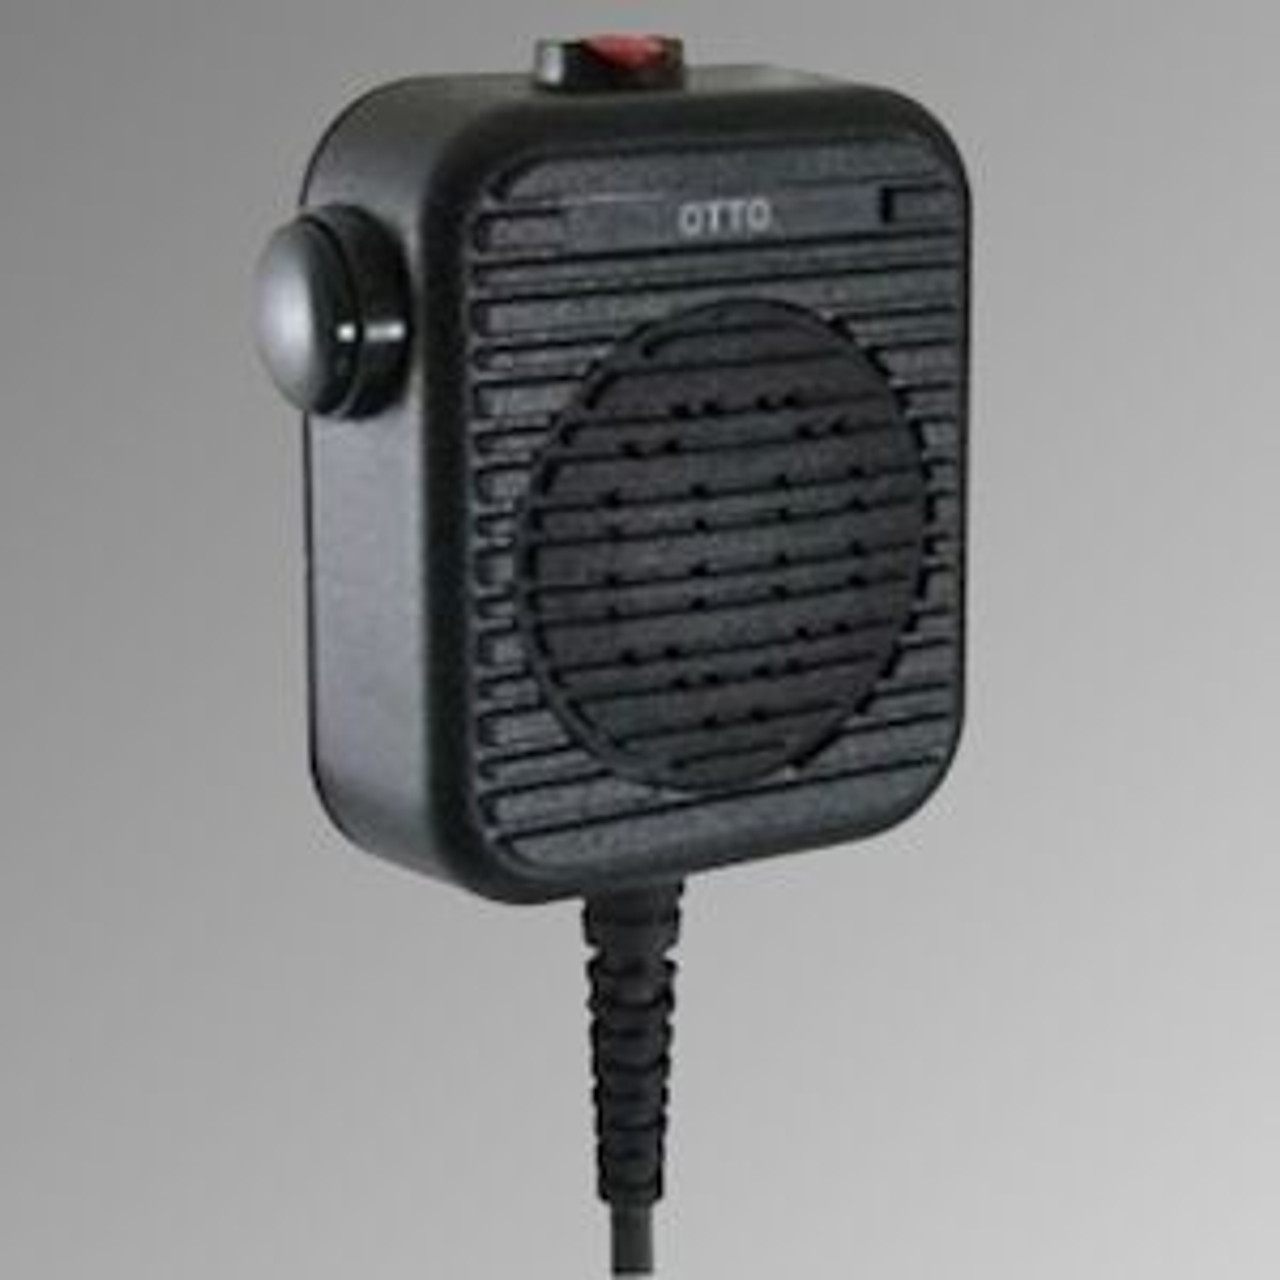 Otto Genesis II Ruggedized Speaker Mic For EF Johnson VP5230